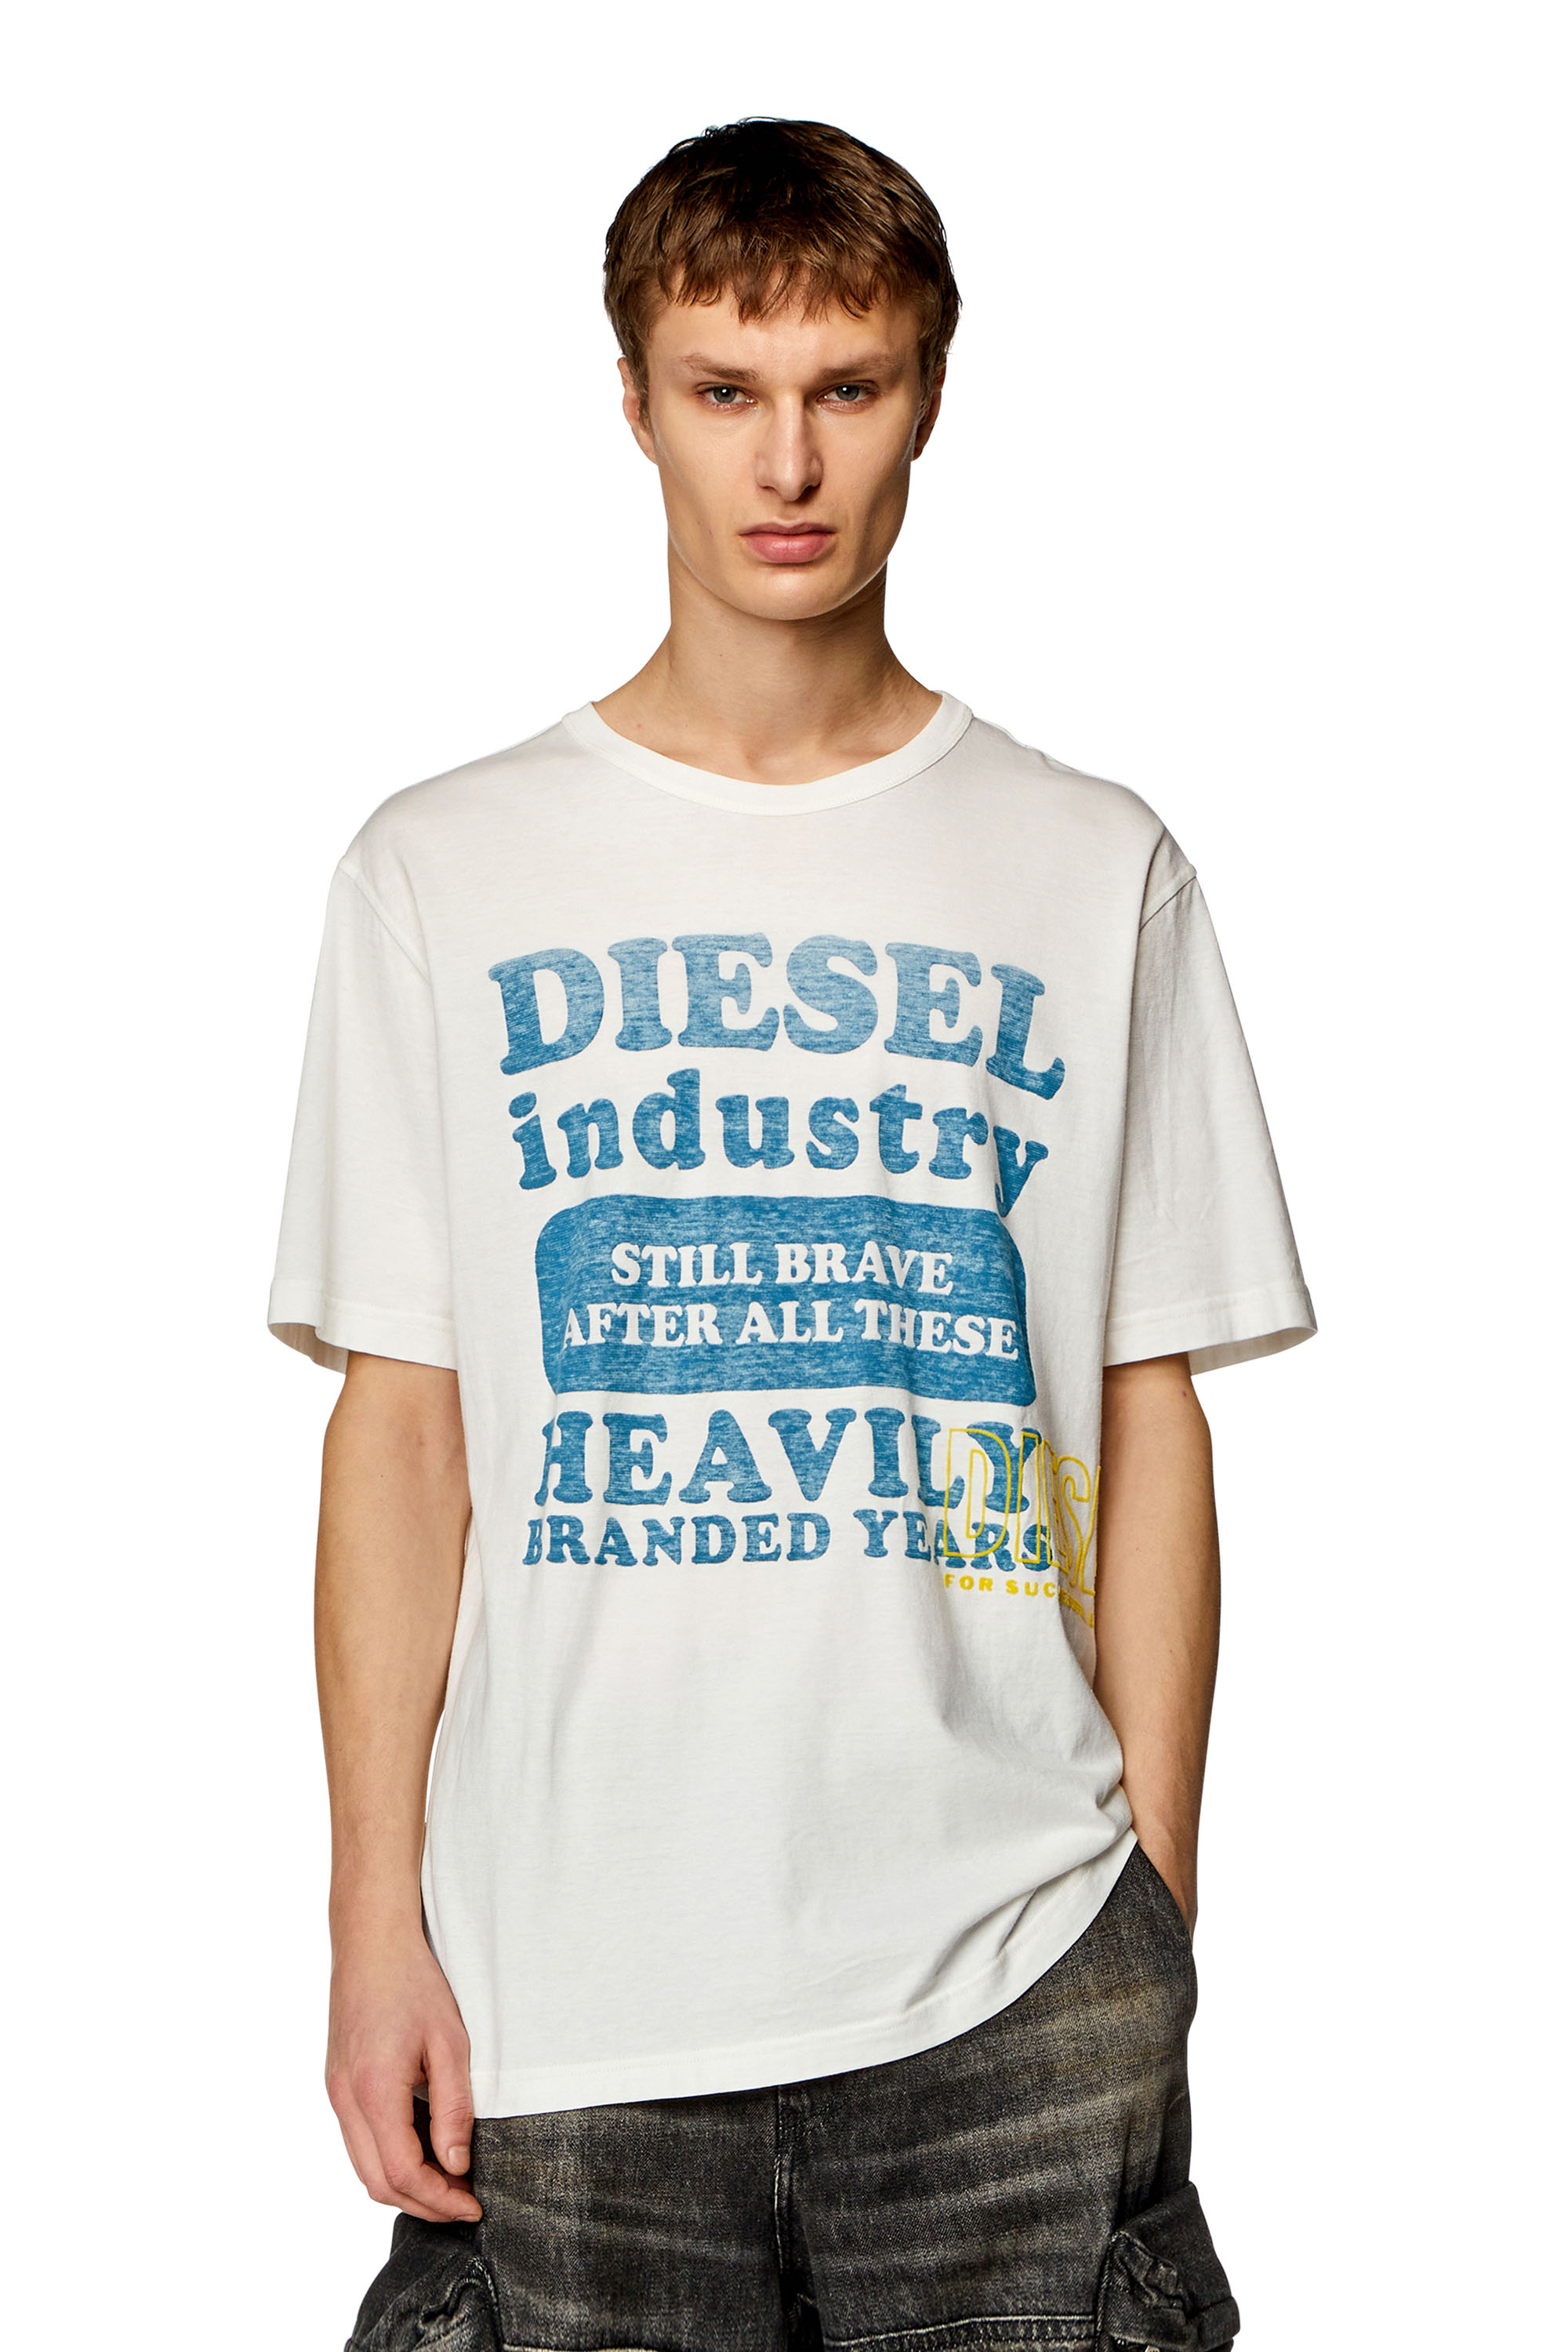 Diesel - T-JUST-N9, Homme T-shirt avec logo imprimé inside-out in Blanc - Image 1